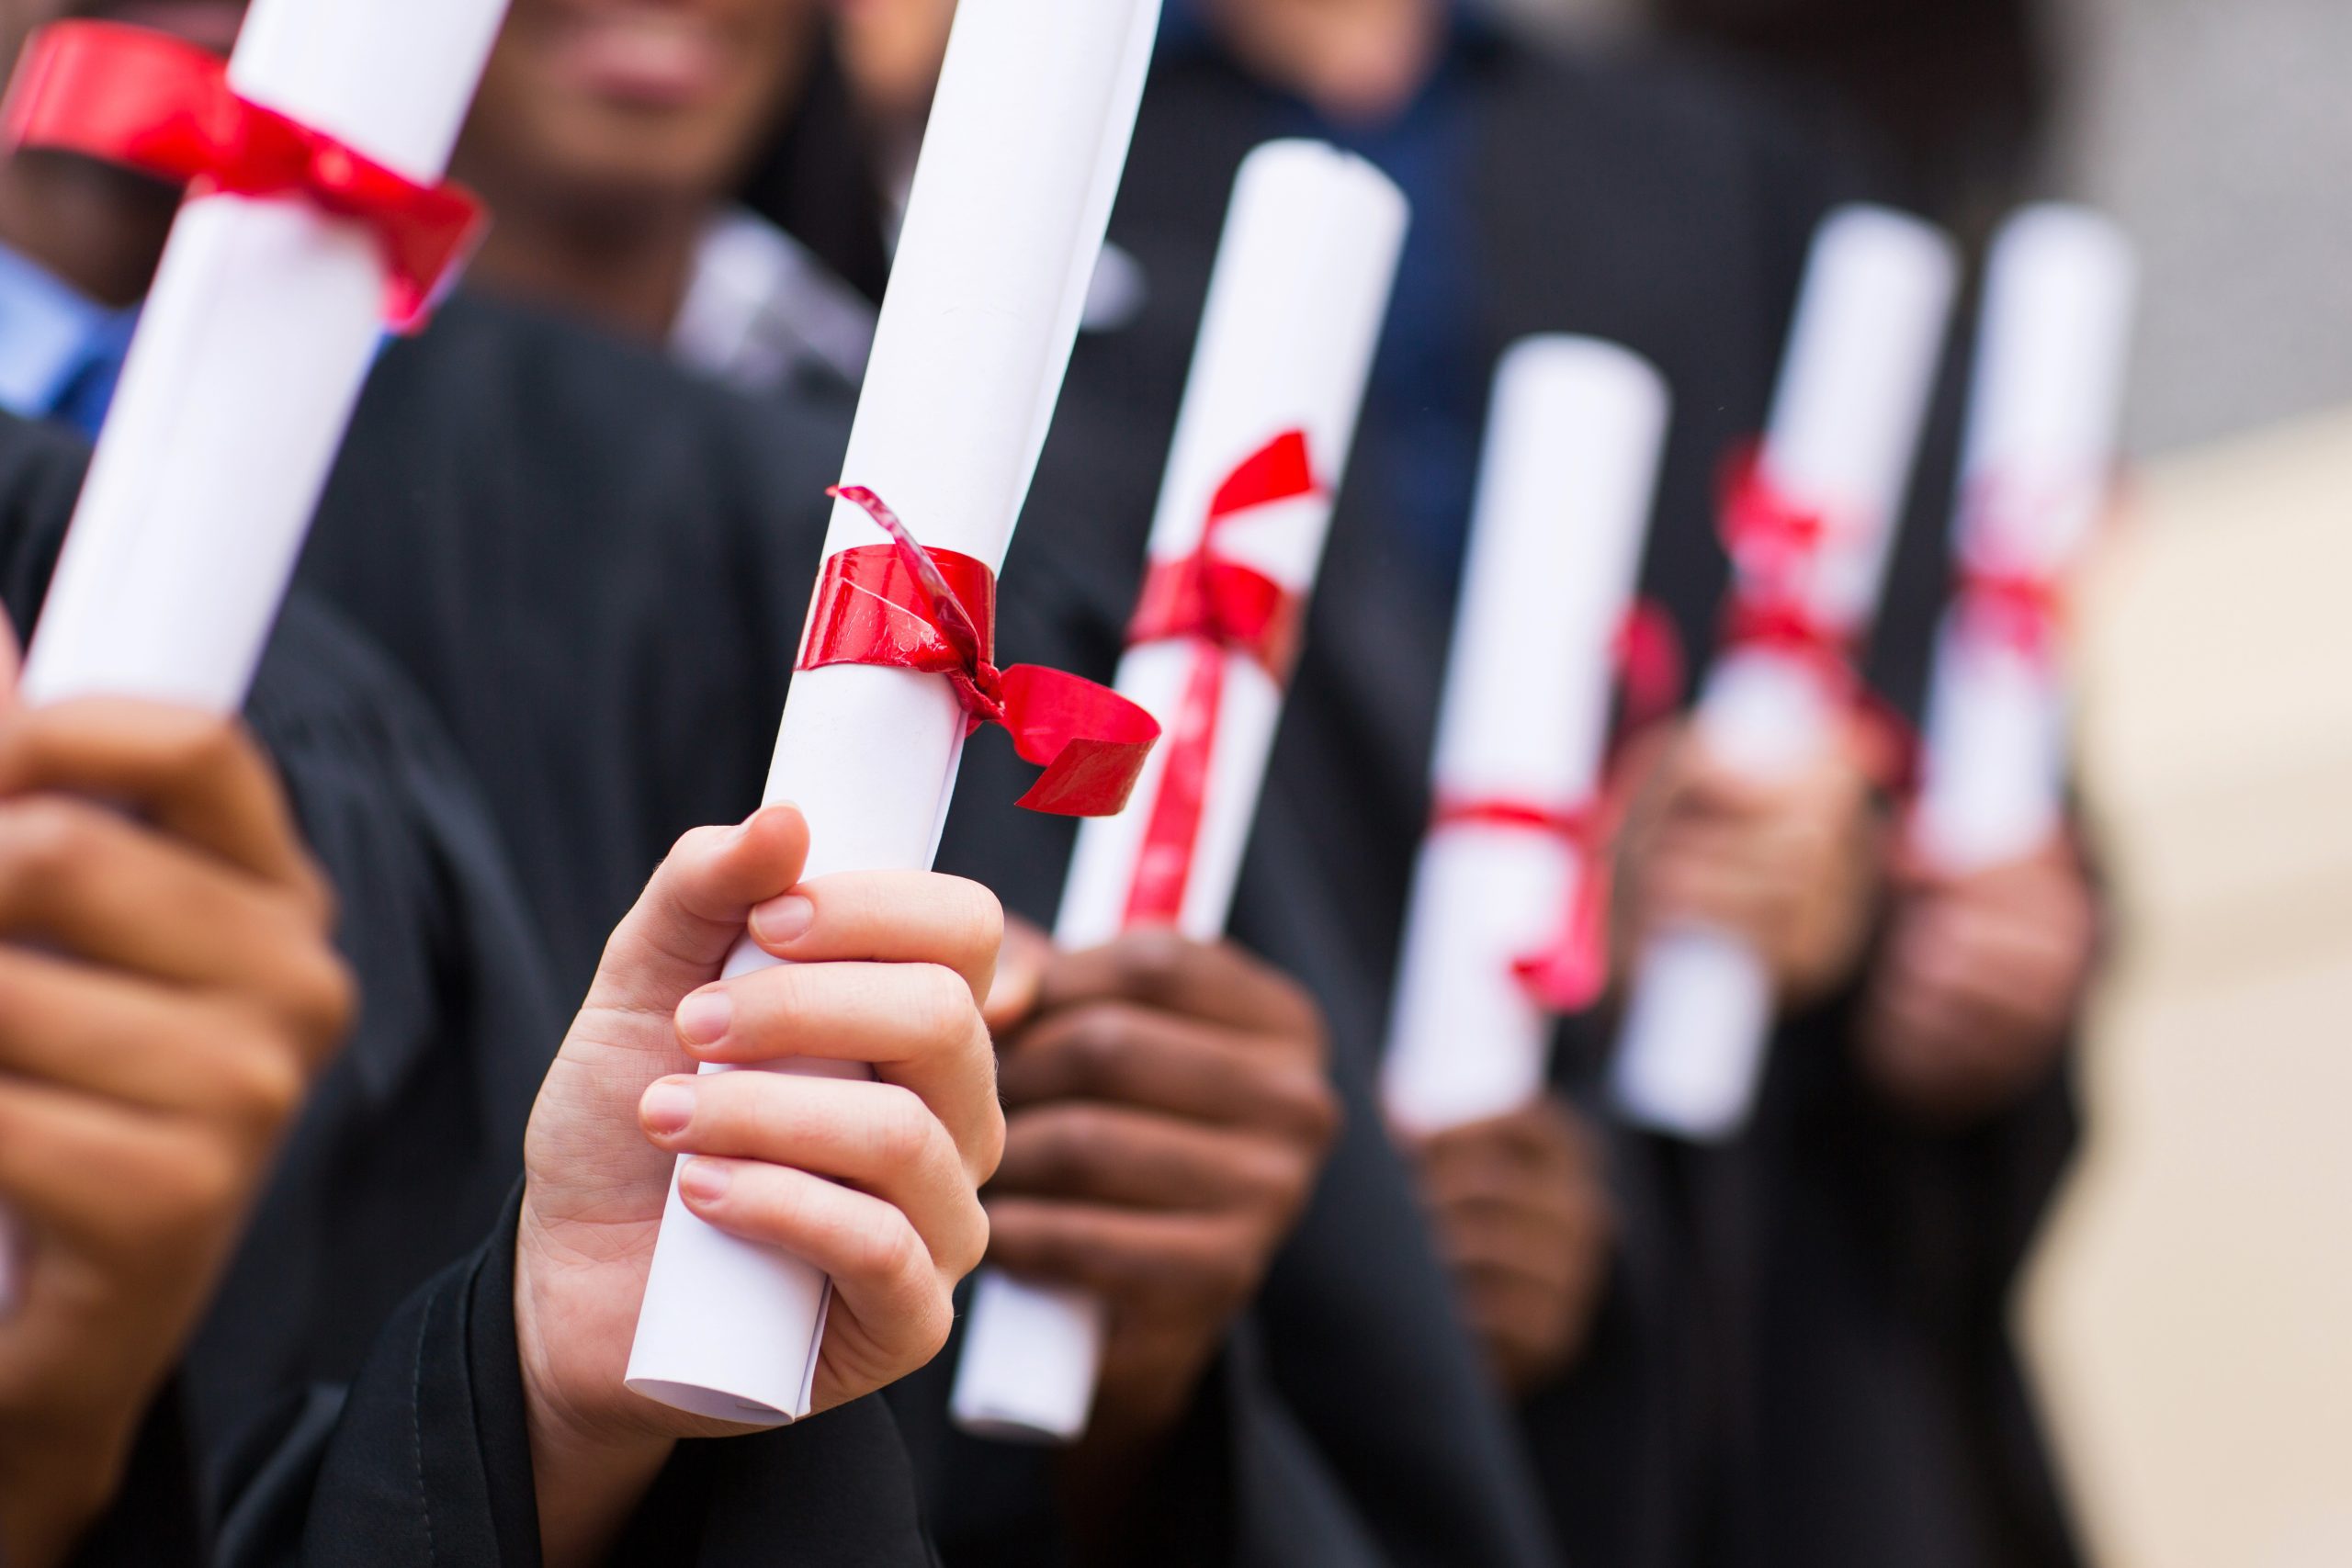 Several hands holding diplomas